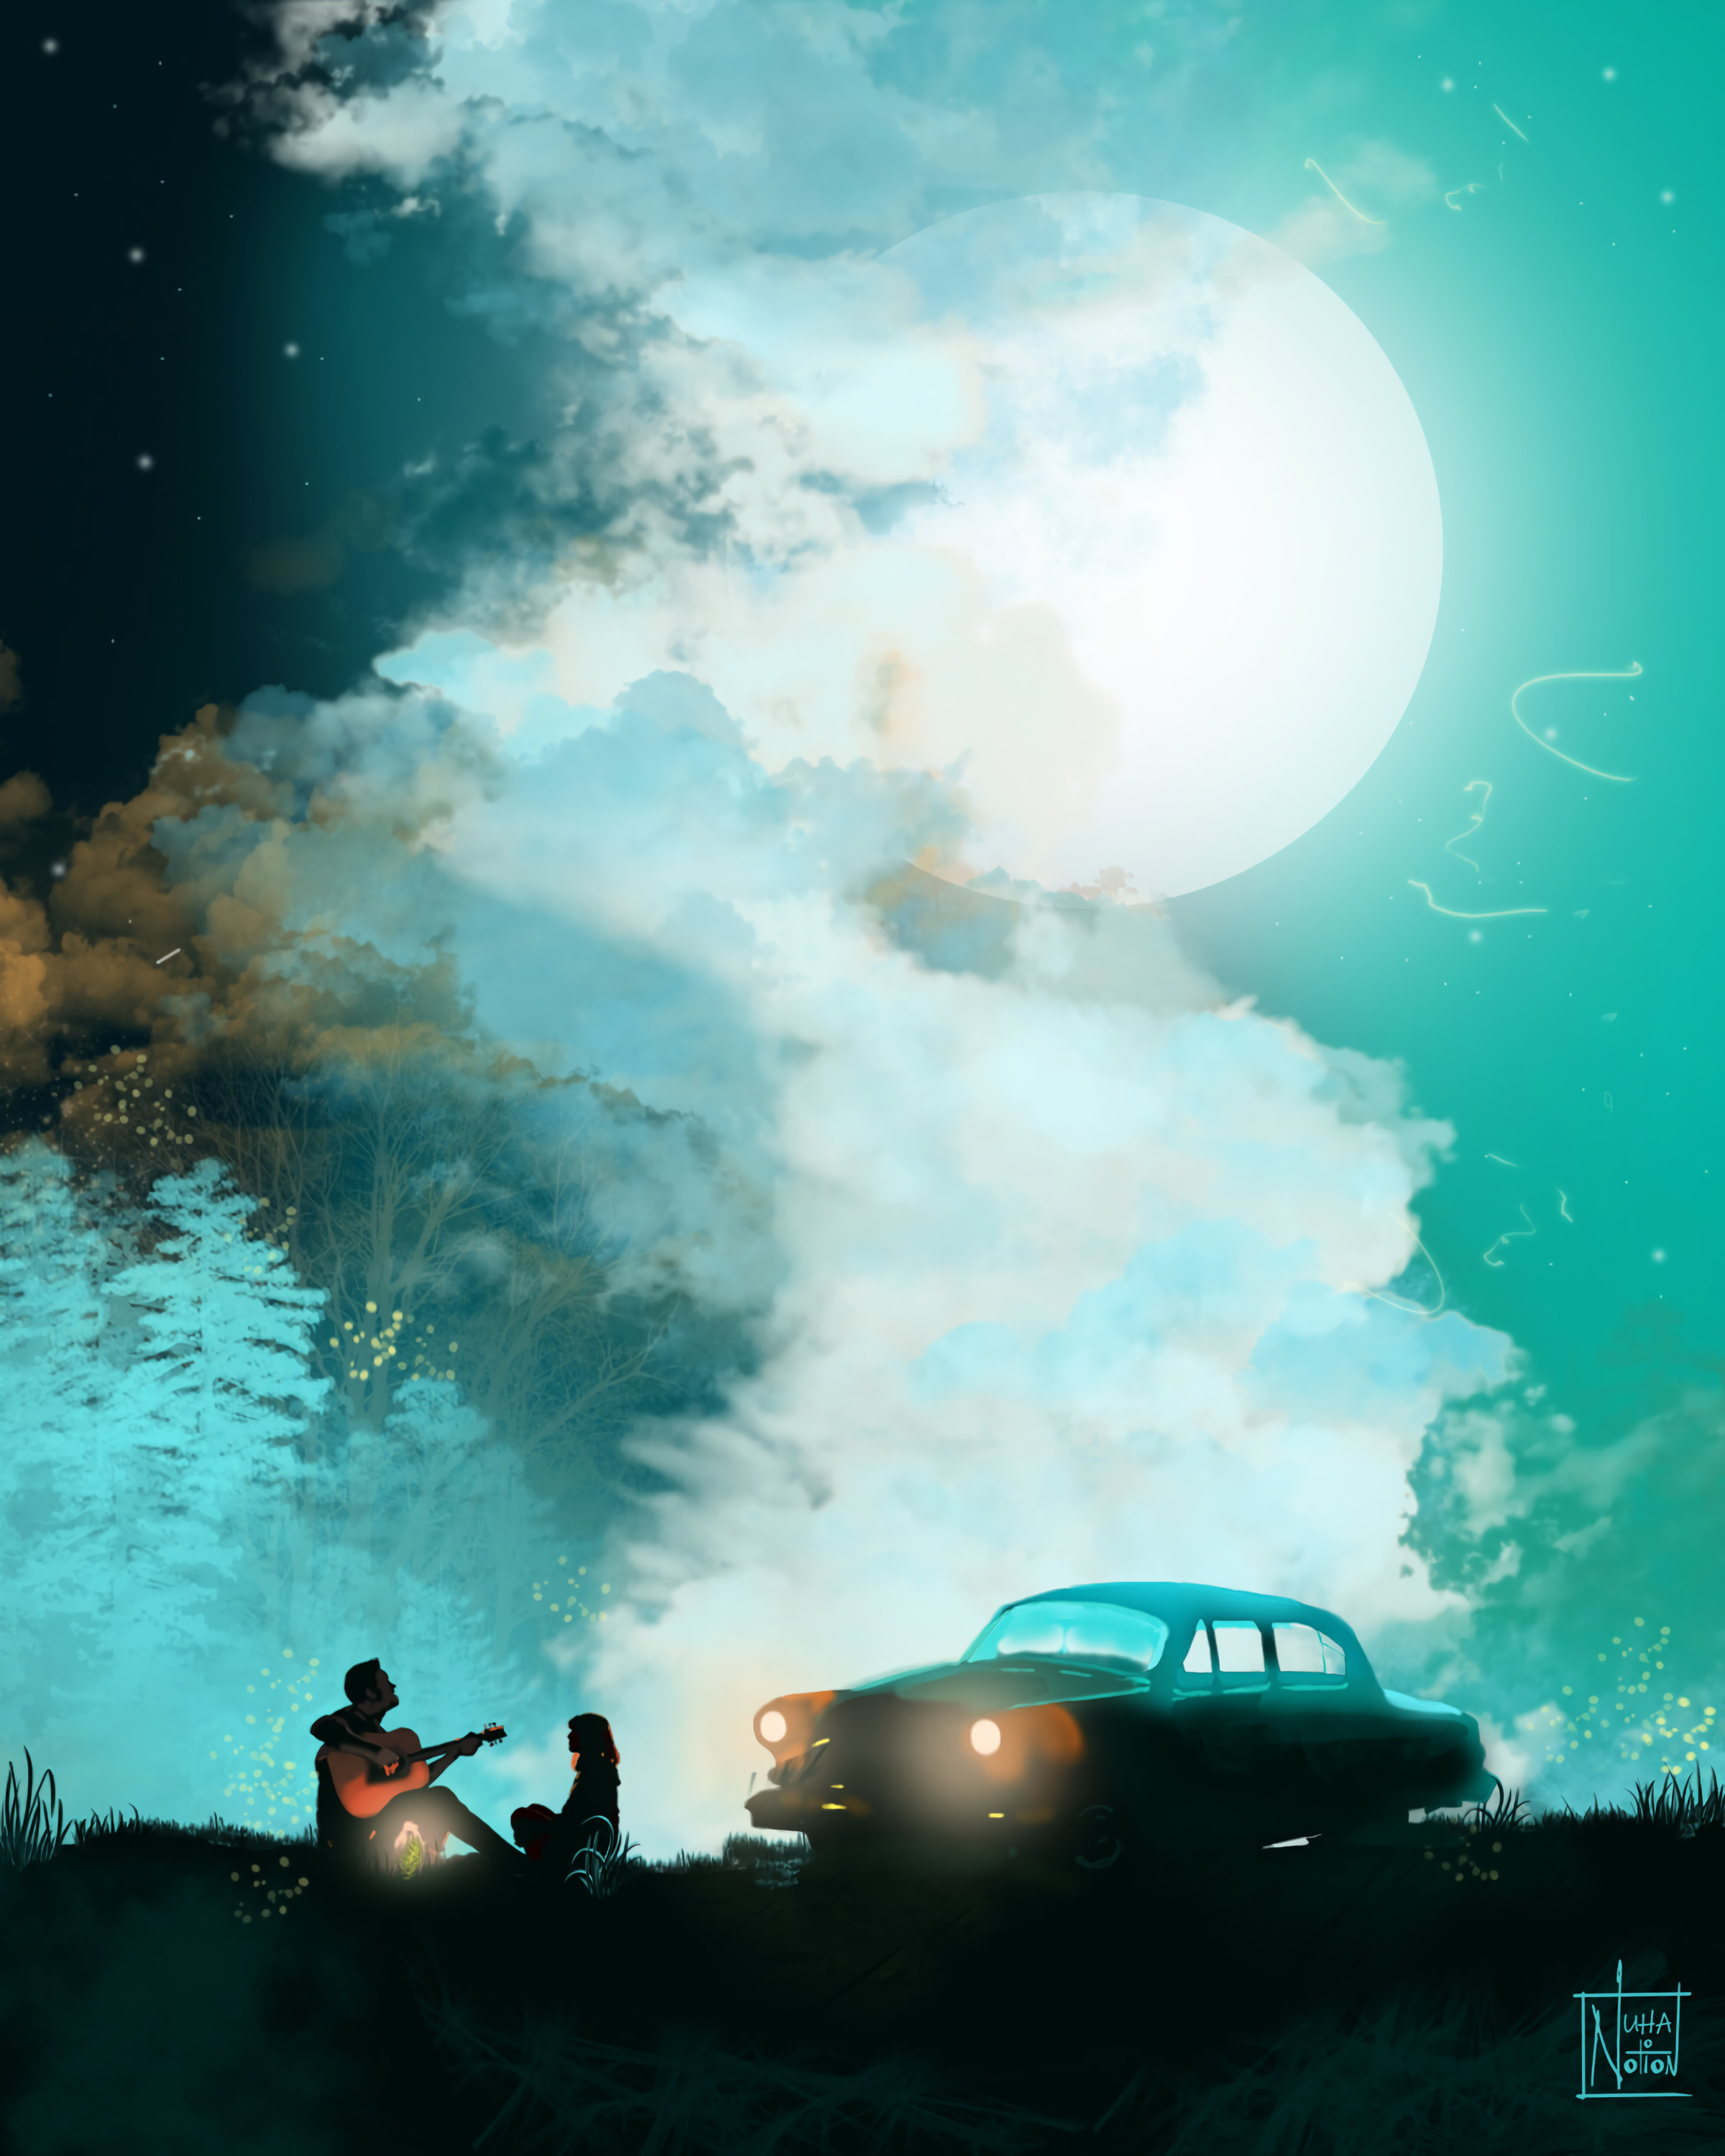 art, night, guitar, moon, silhouettes, car